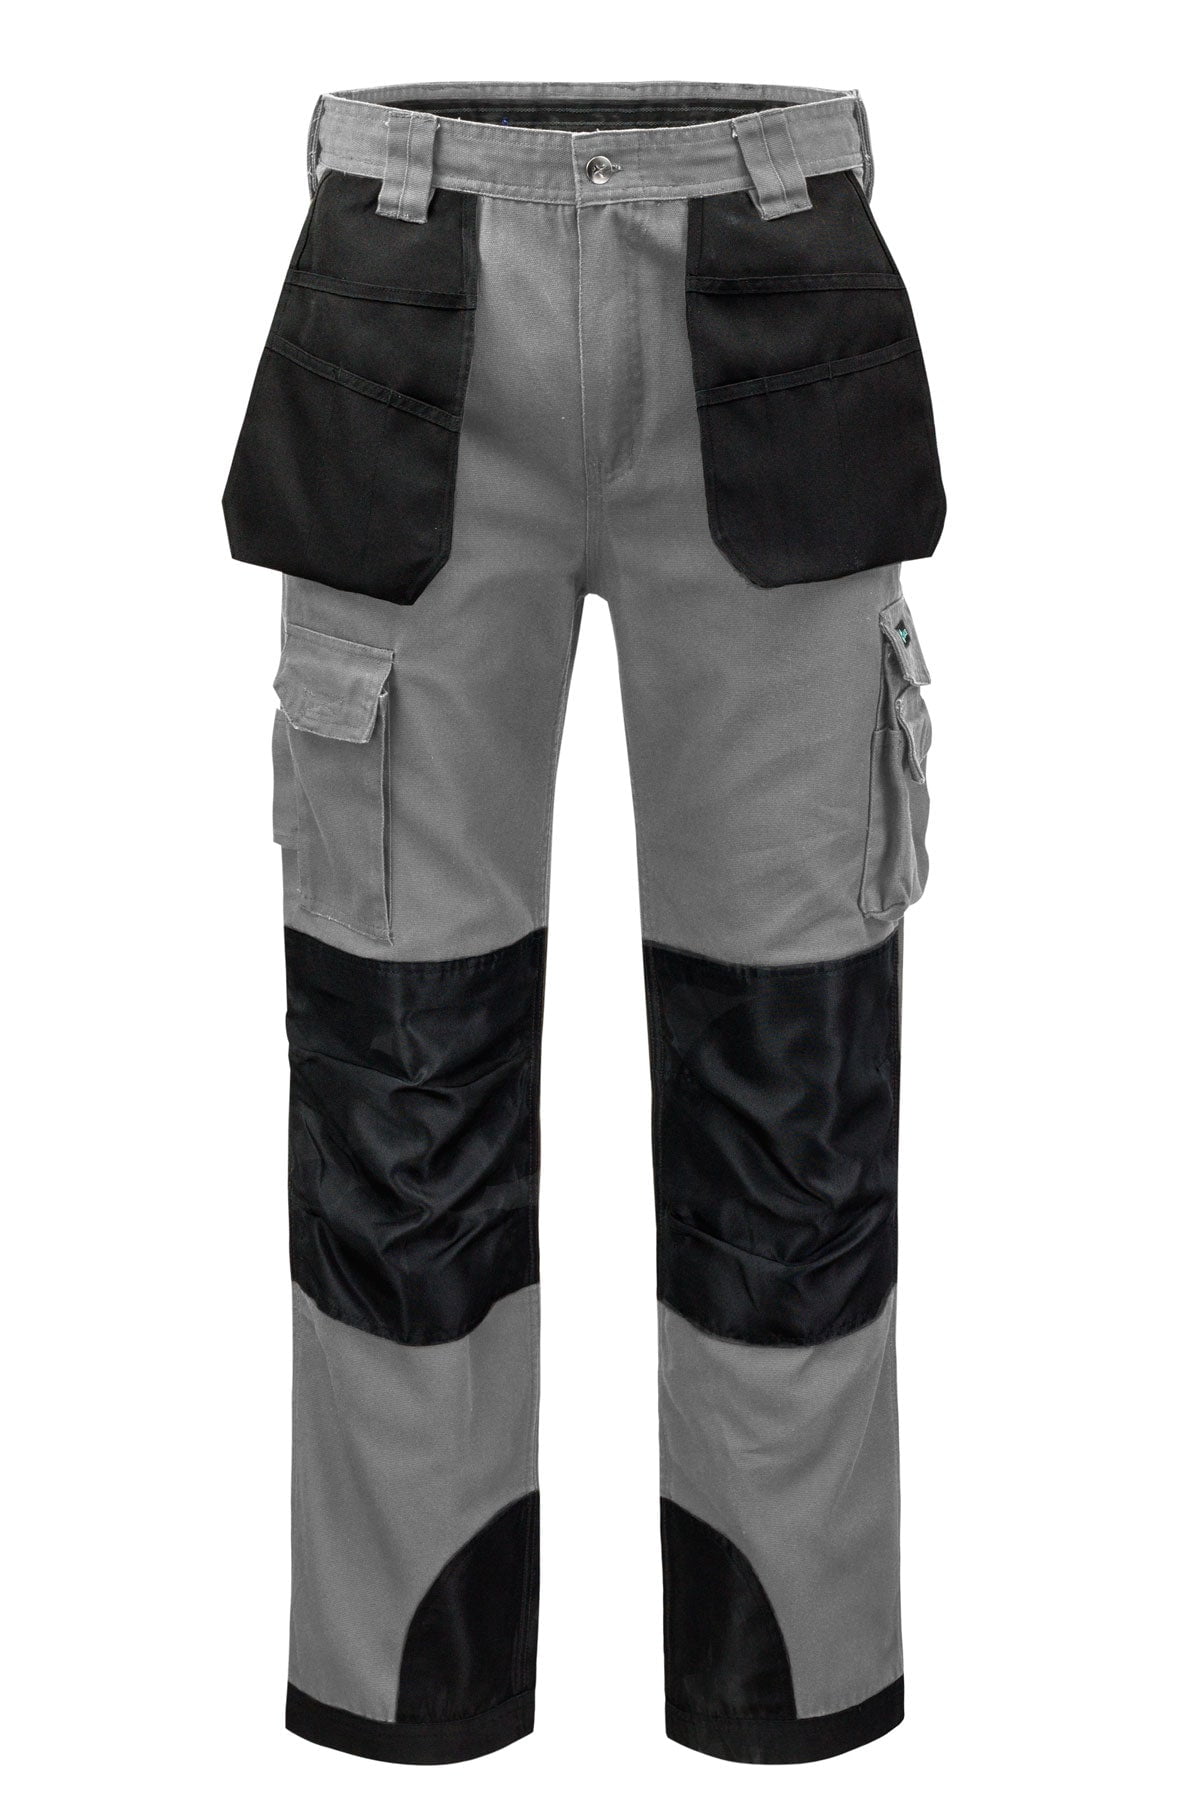 Mens Workwear Trousers Workwear Black Grey Khaki Heavy duty Cargo Working Pants 